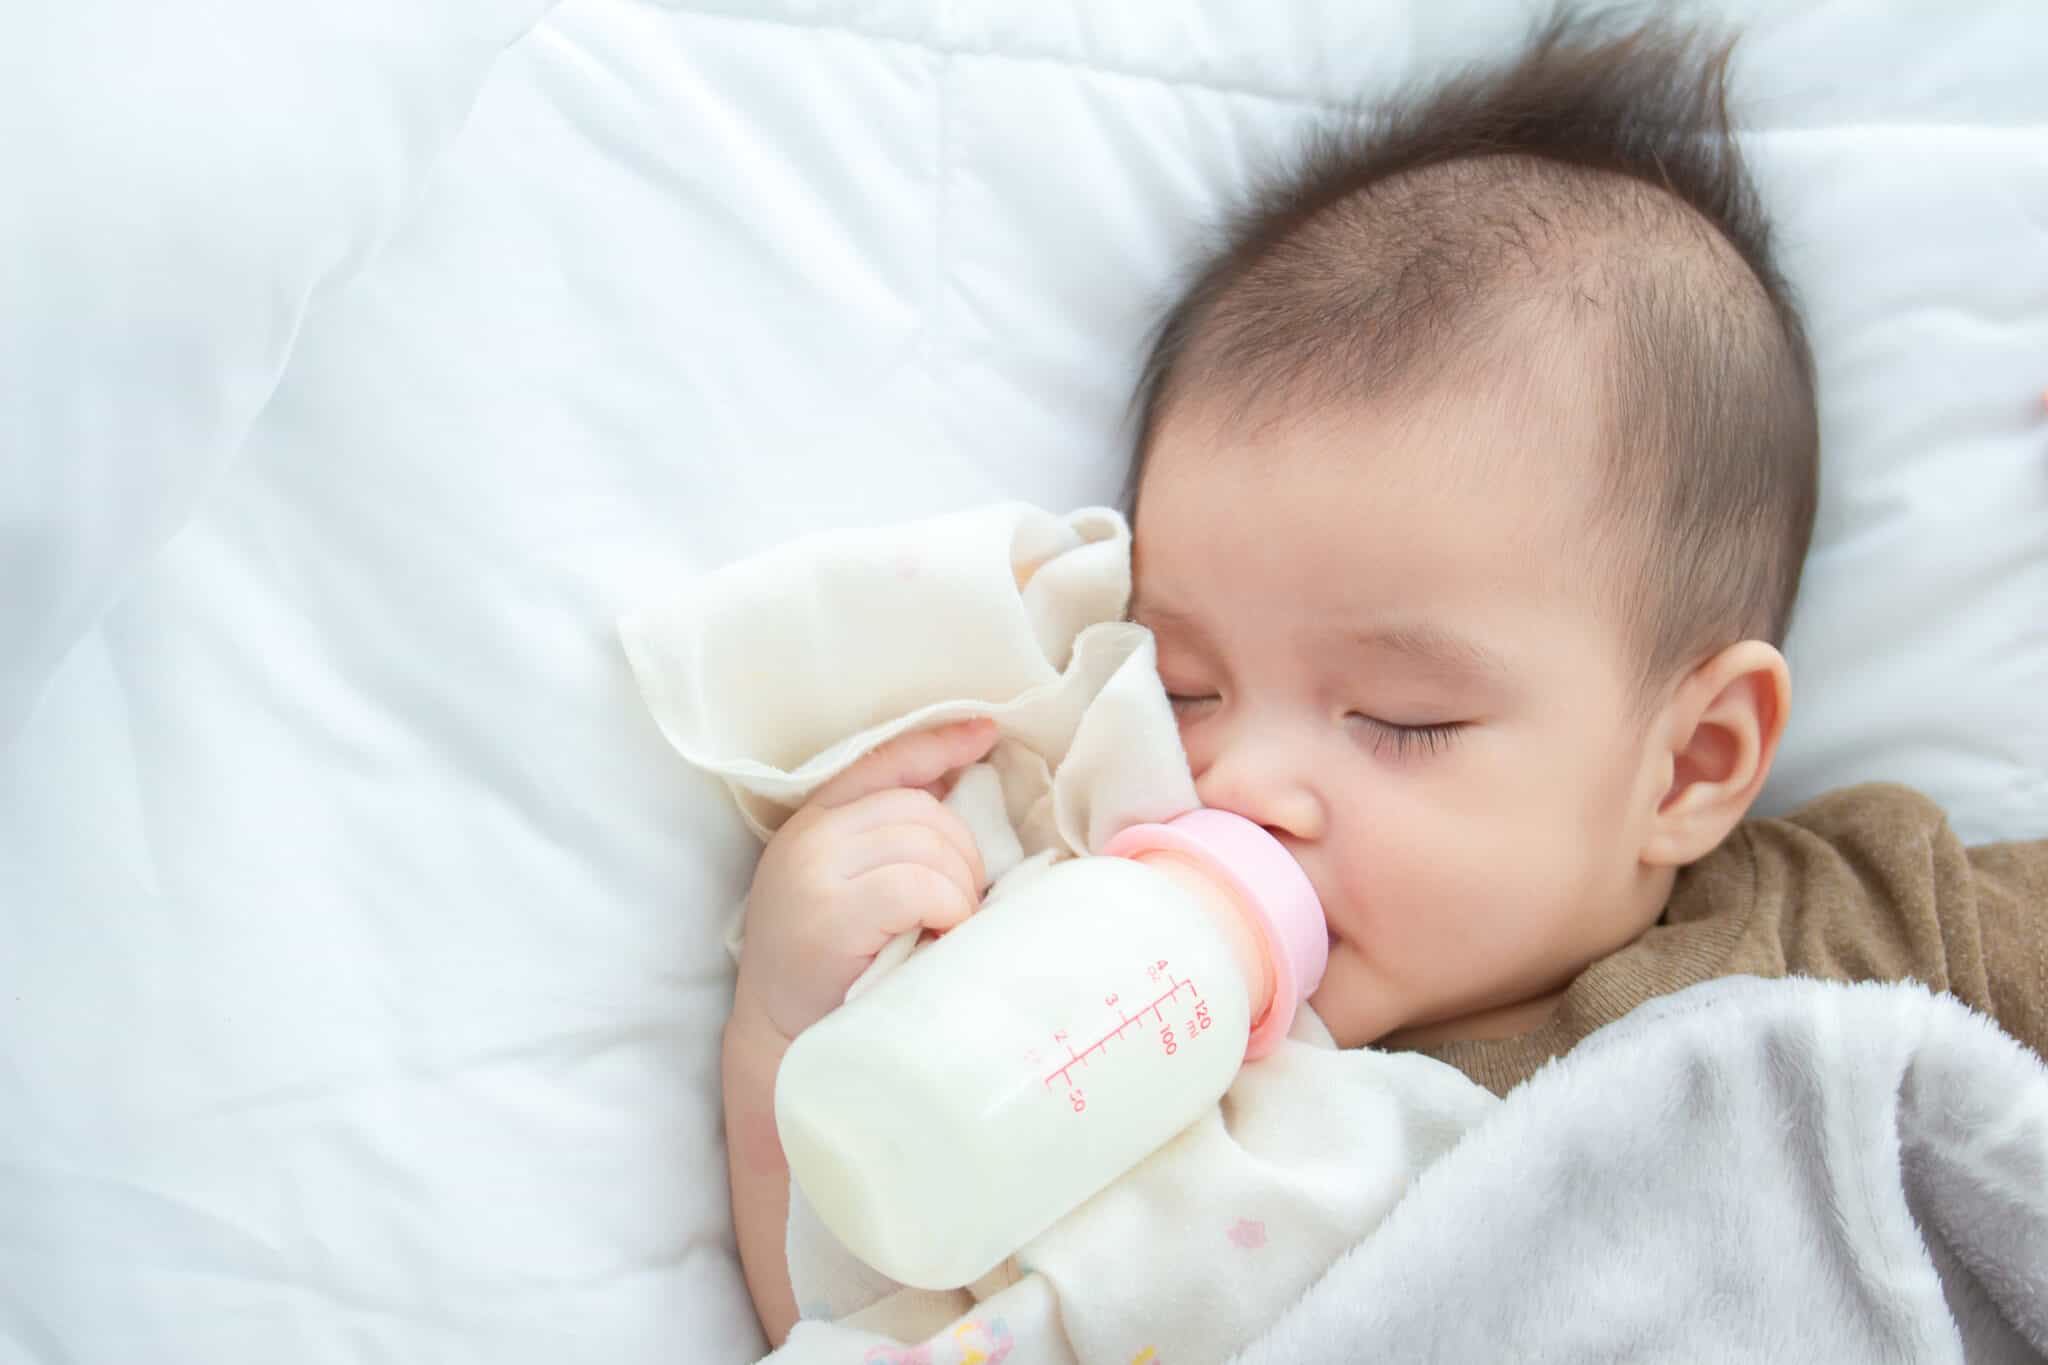 Sleeping Milk. Milky Sleep. Many Baby. К чему снится пить во сне молоко